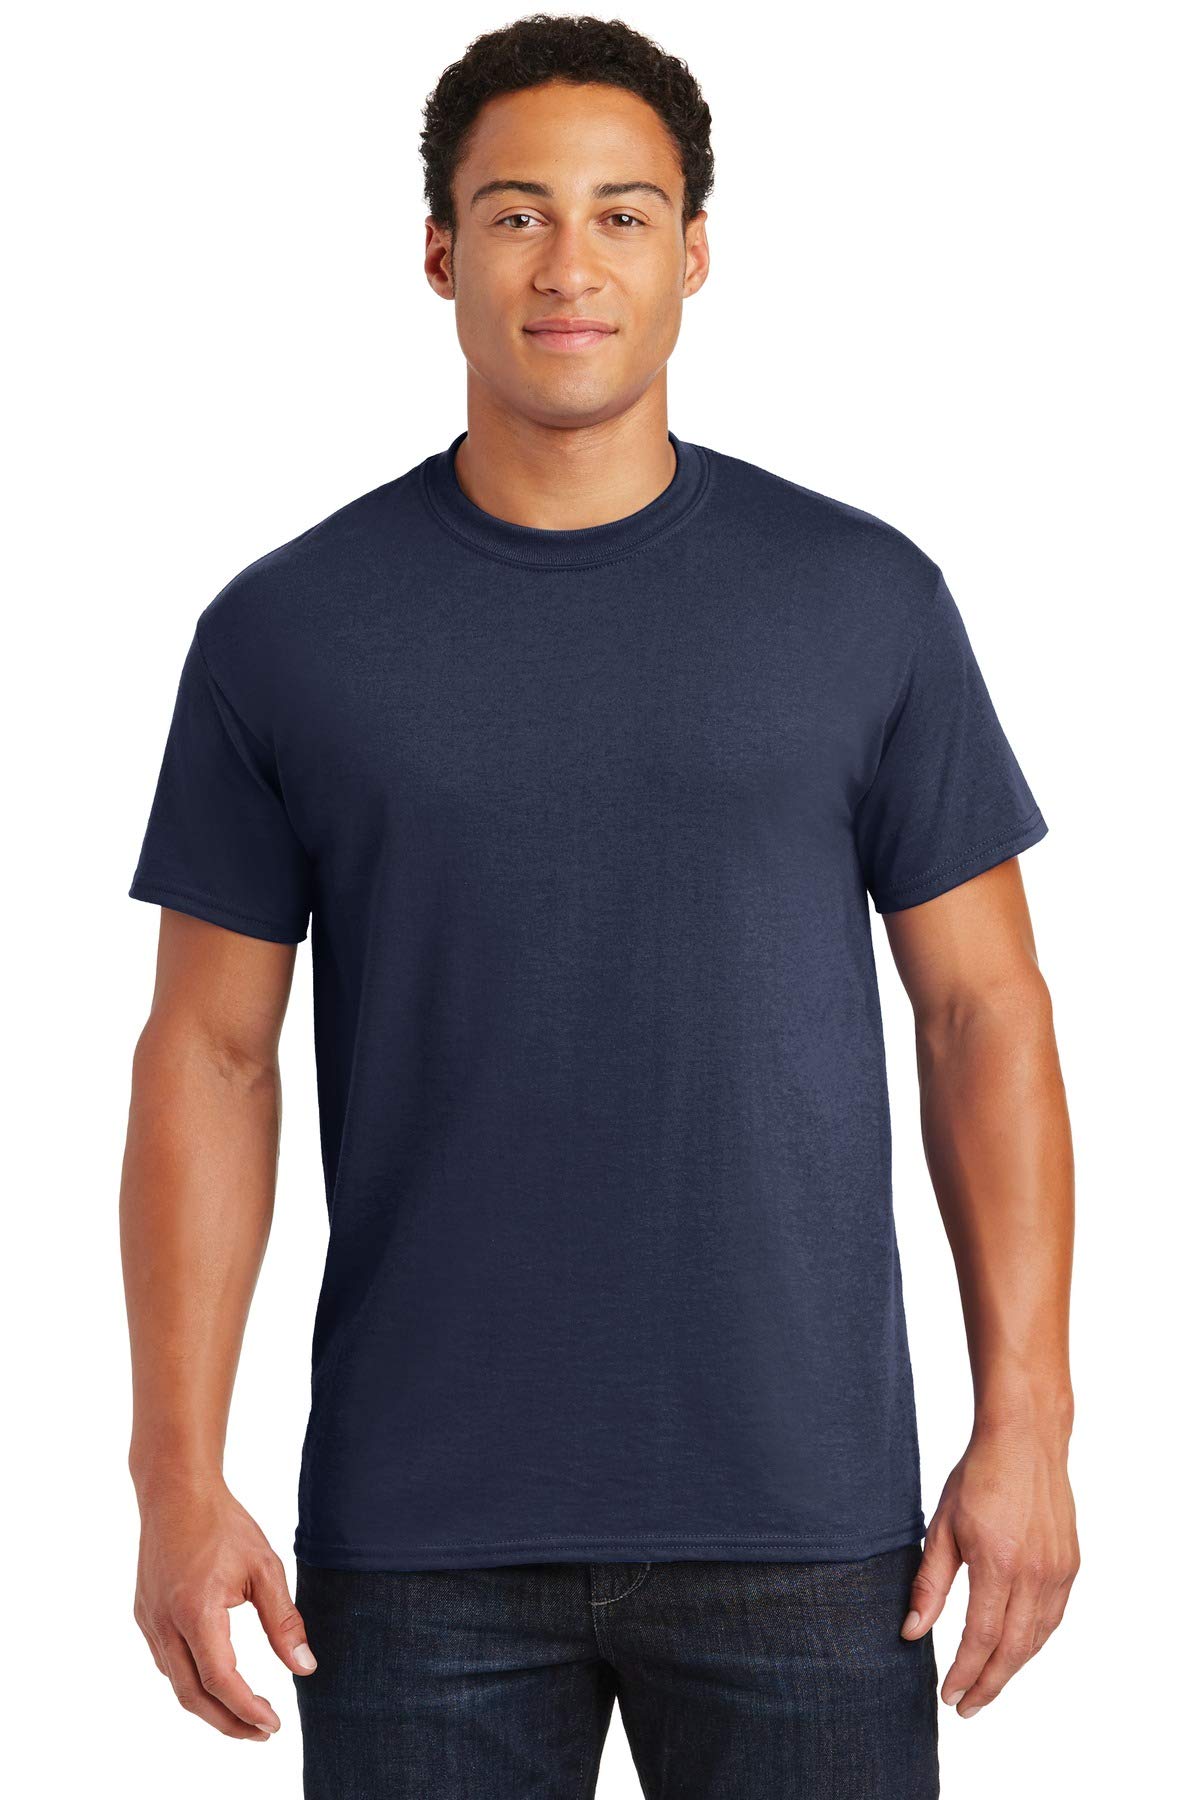 Gildan Large Men's DryBlend Classic T-Shirt